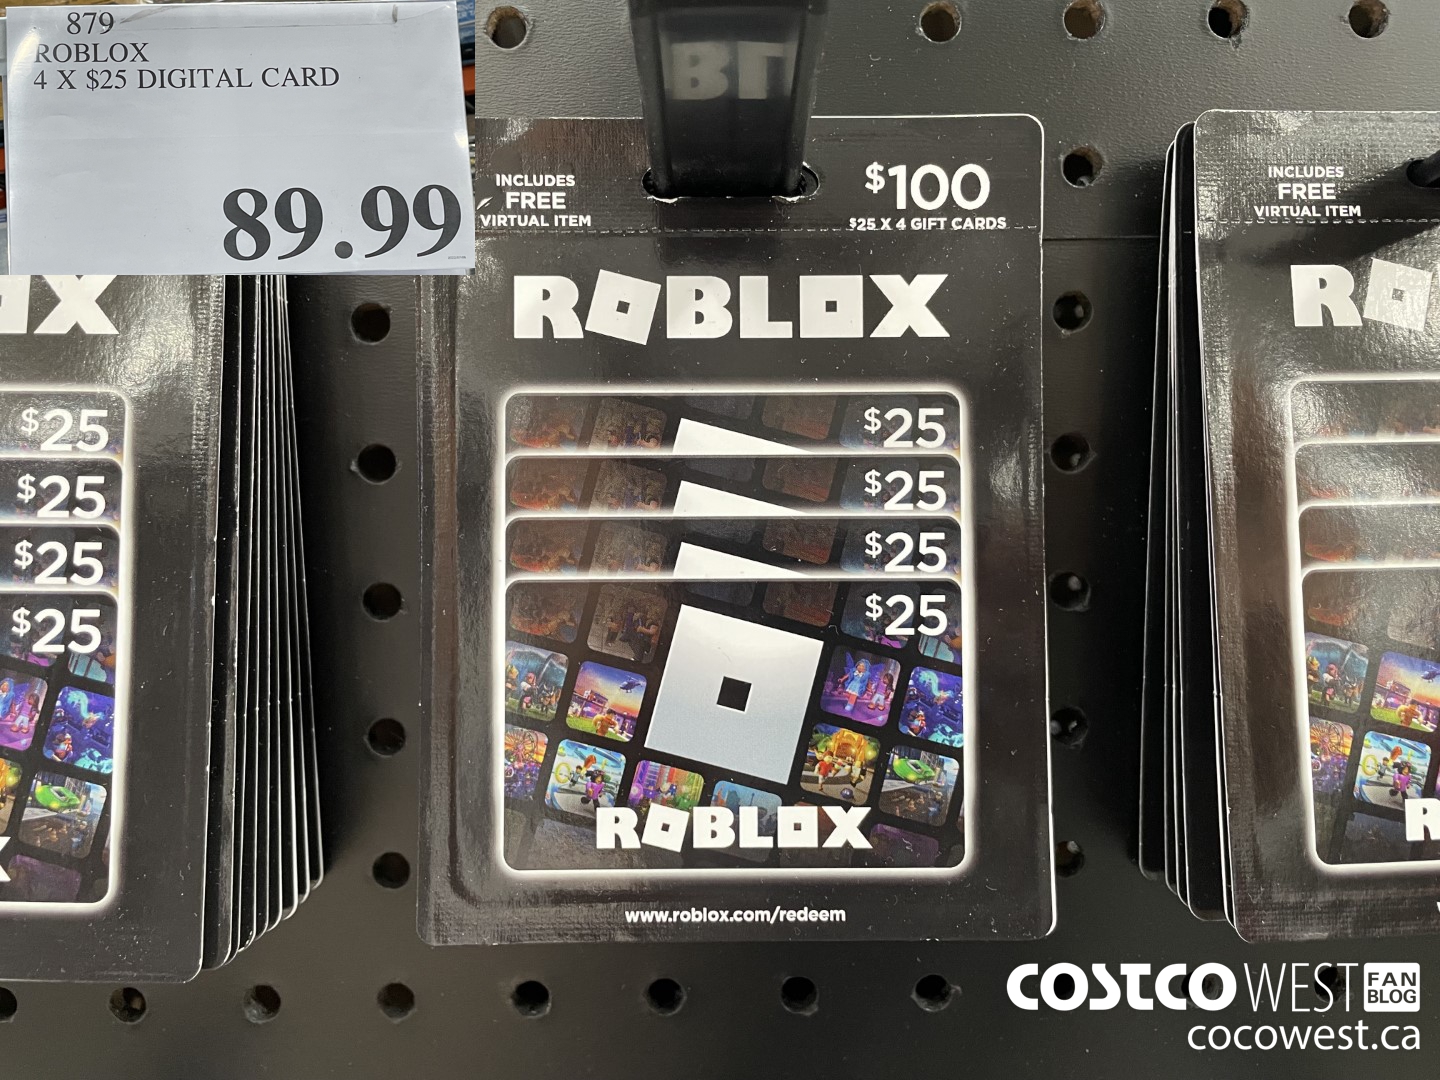 879 ROBLOX 4 X 25 DIGITAL CARD 89 99 - Costco East Fan Blog